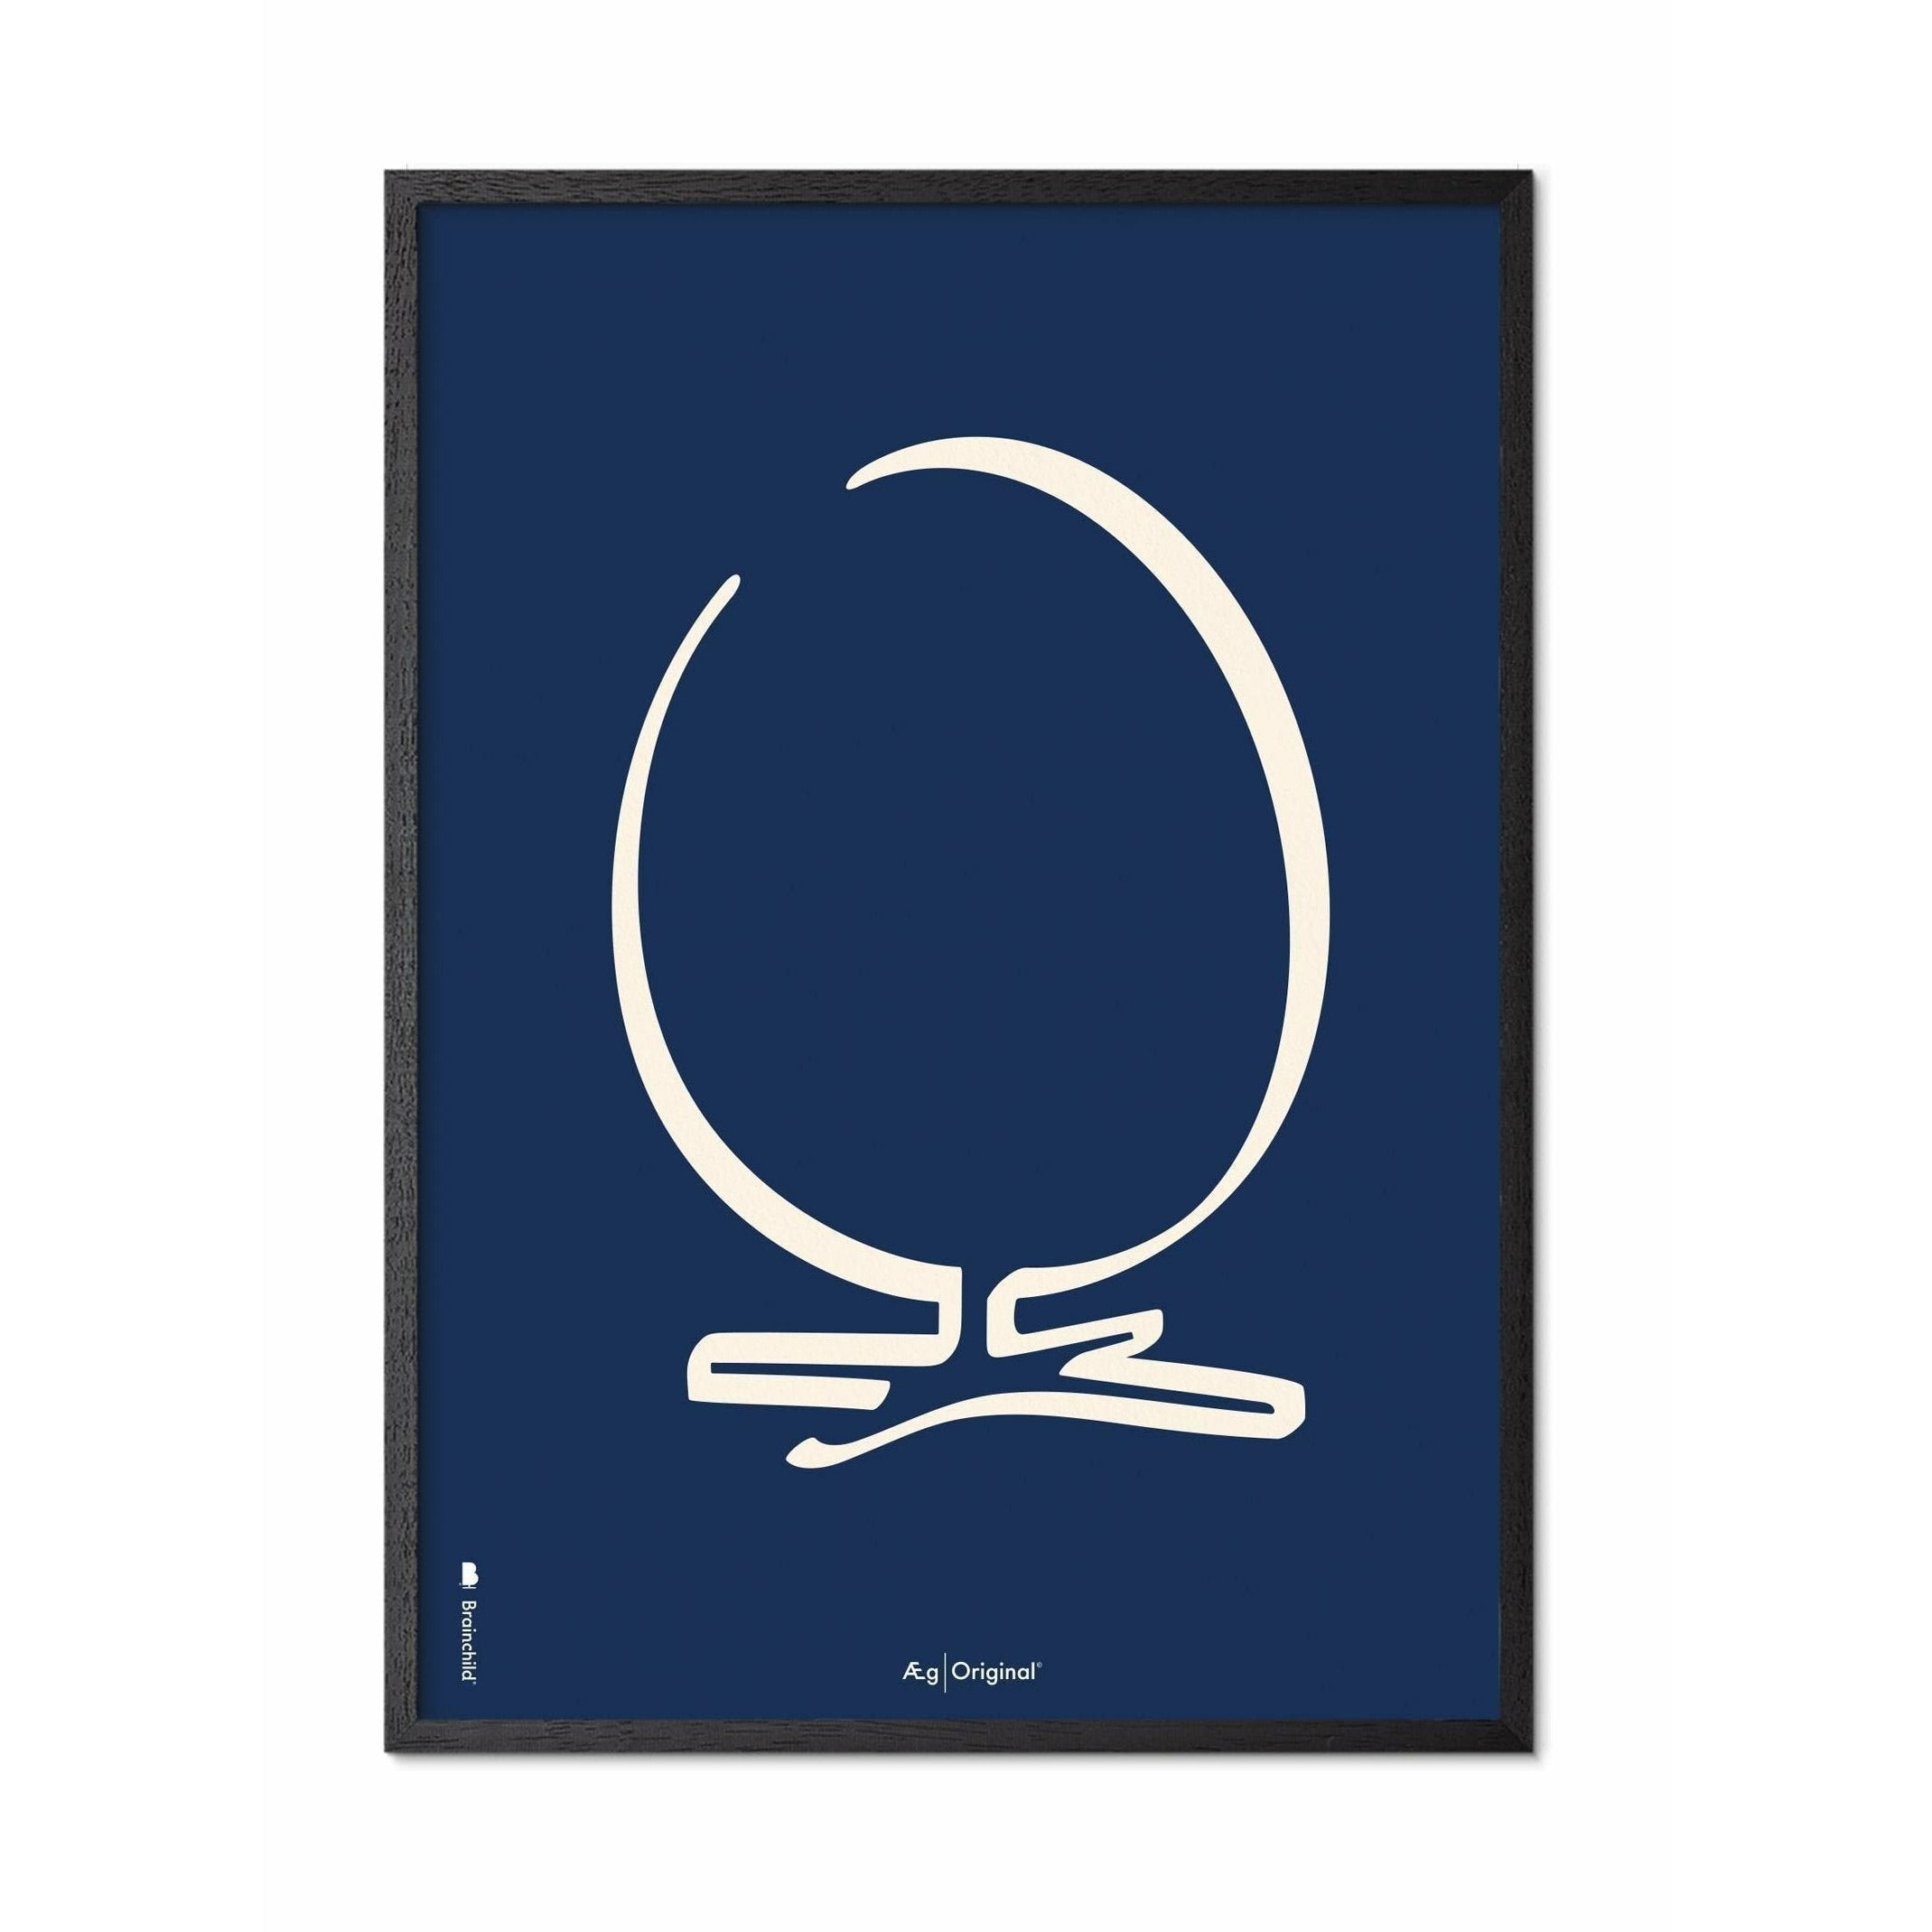 Brainchild Egg Line Poster, Frame In Black Lacquered Wood 30x40 Cm, Blue Background